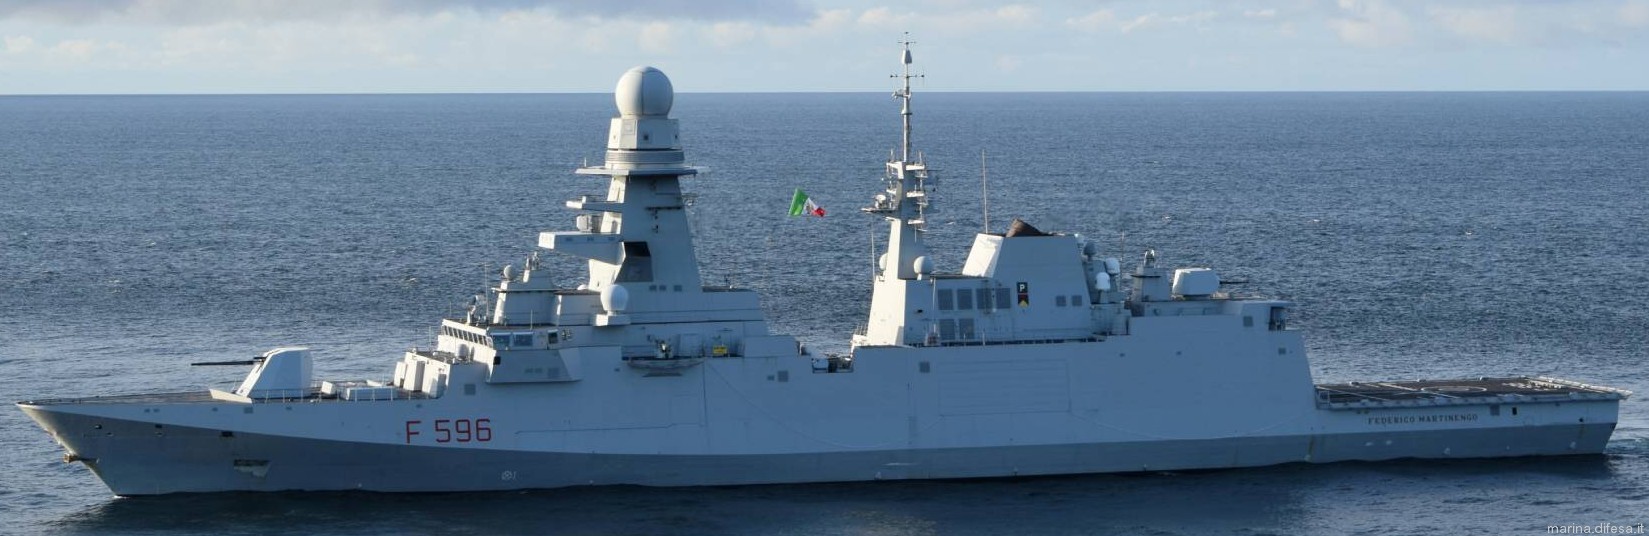 f-596 federico martinengo its nave bergamini fremm class guided missile frigate italian navy marina militare 27